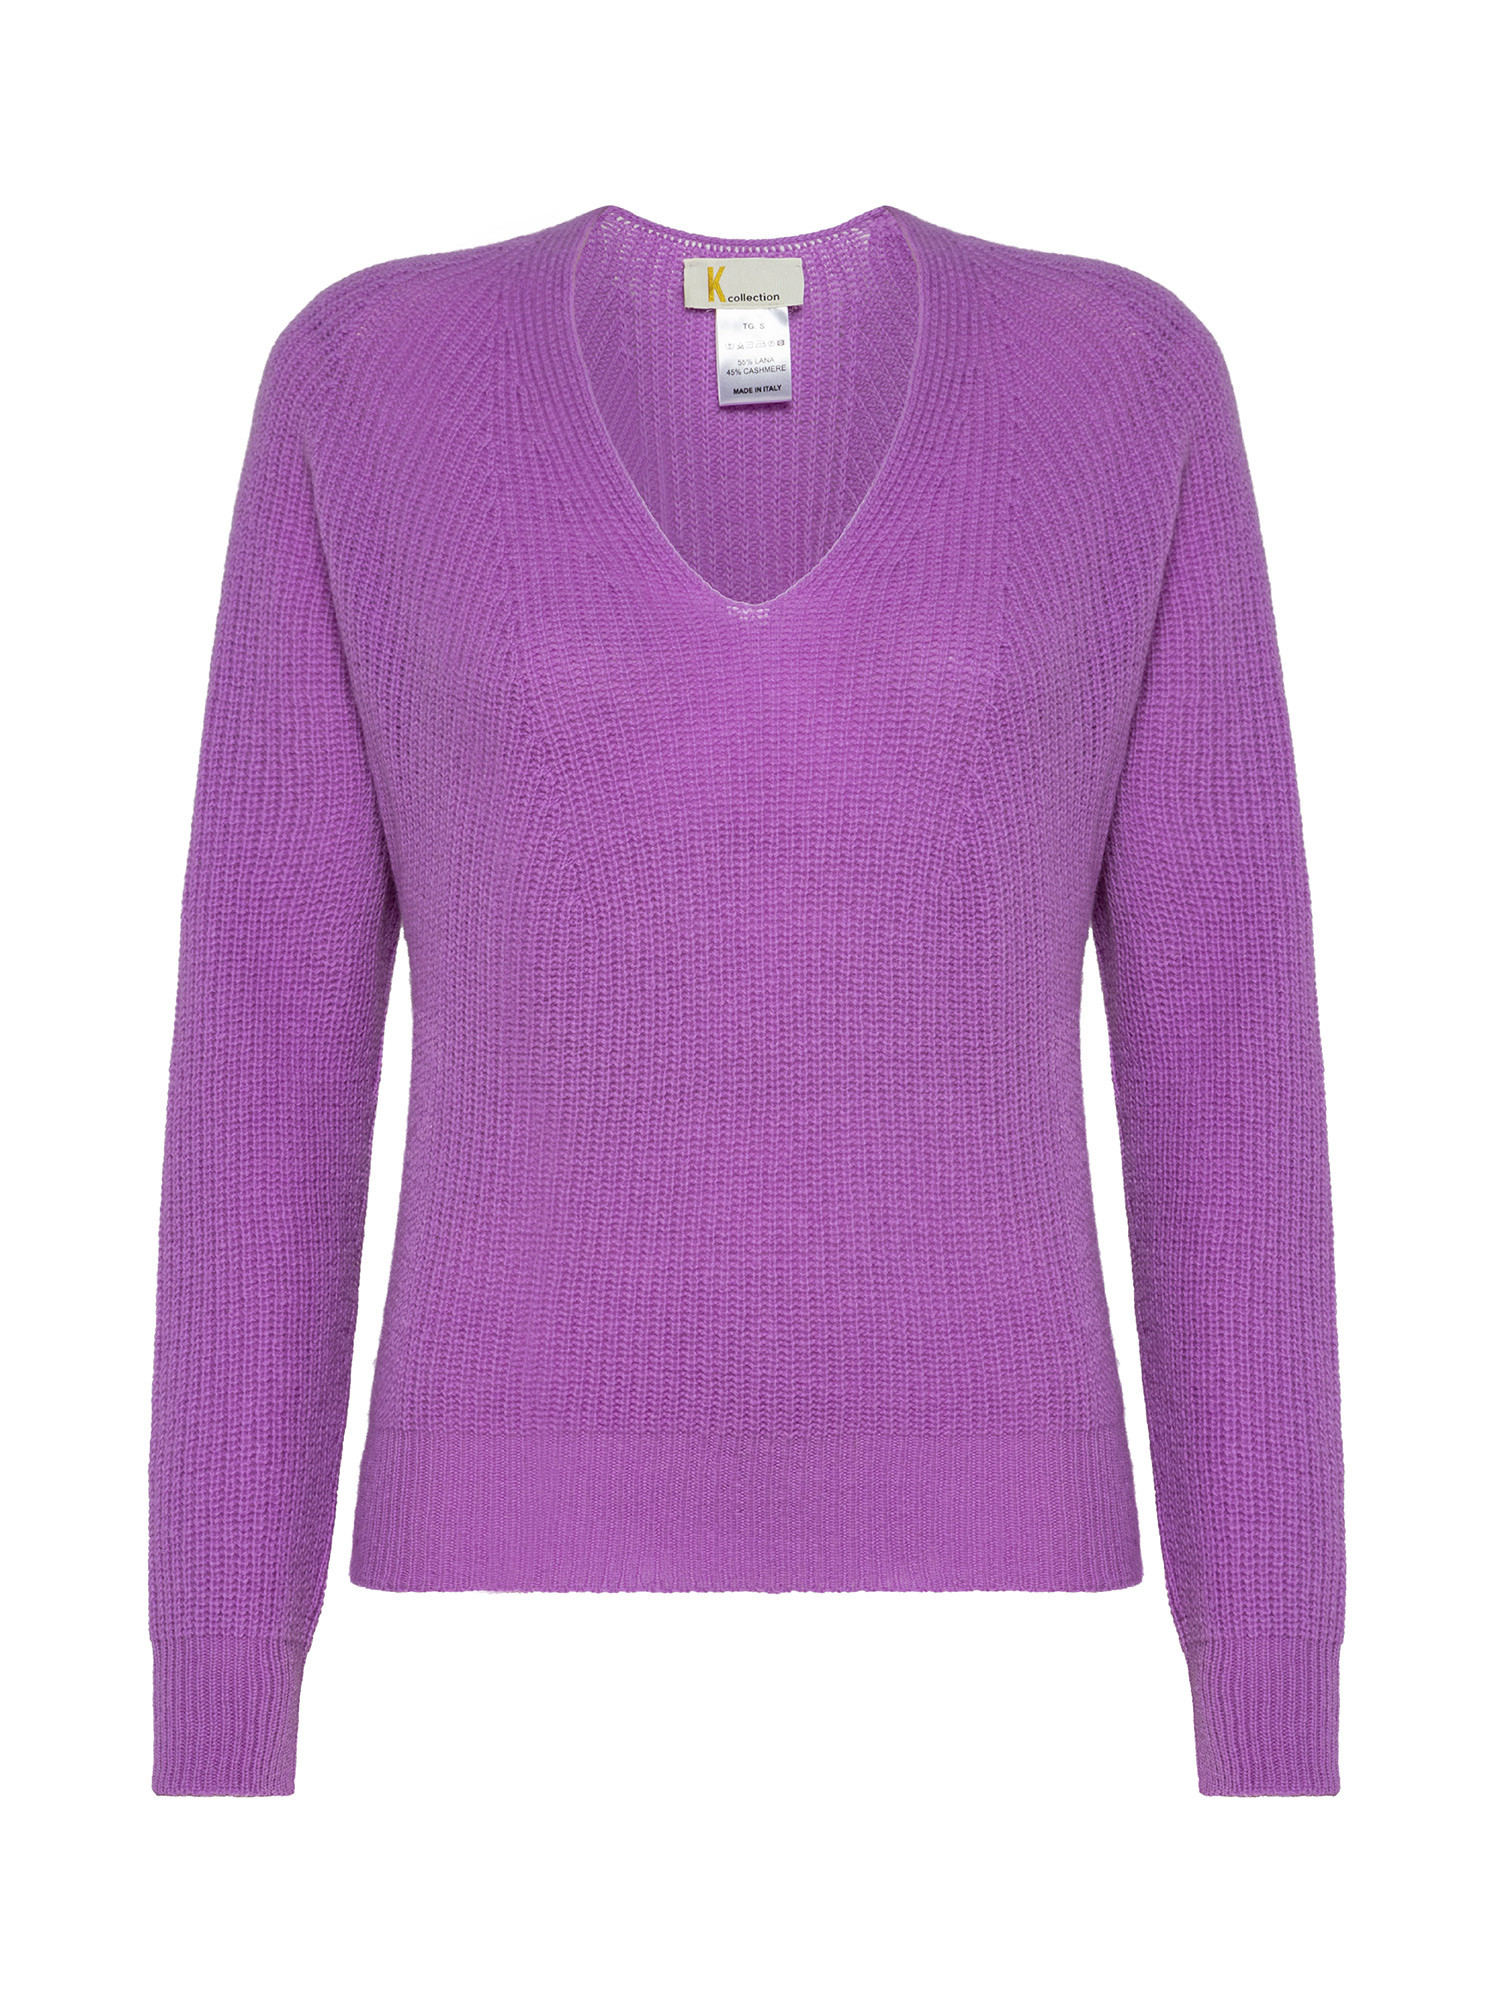 K Collection - V-neck sweater, Purple Lilac, large image number 0